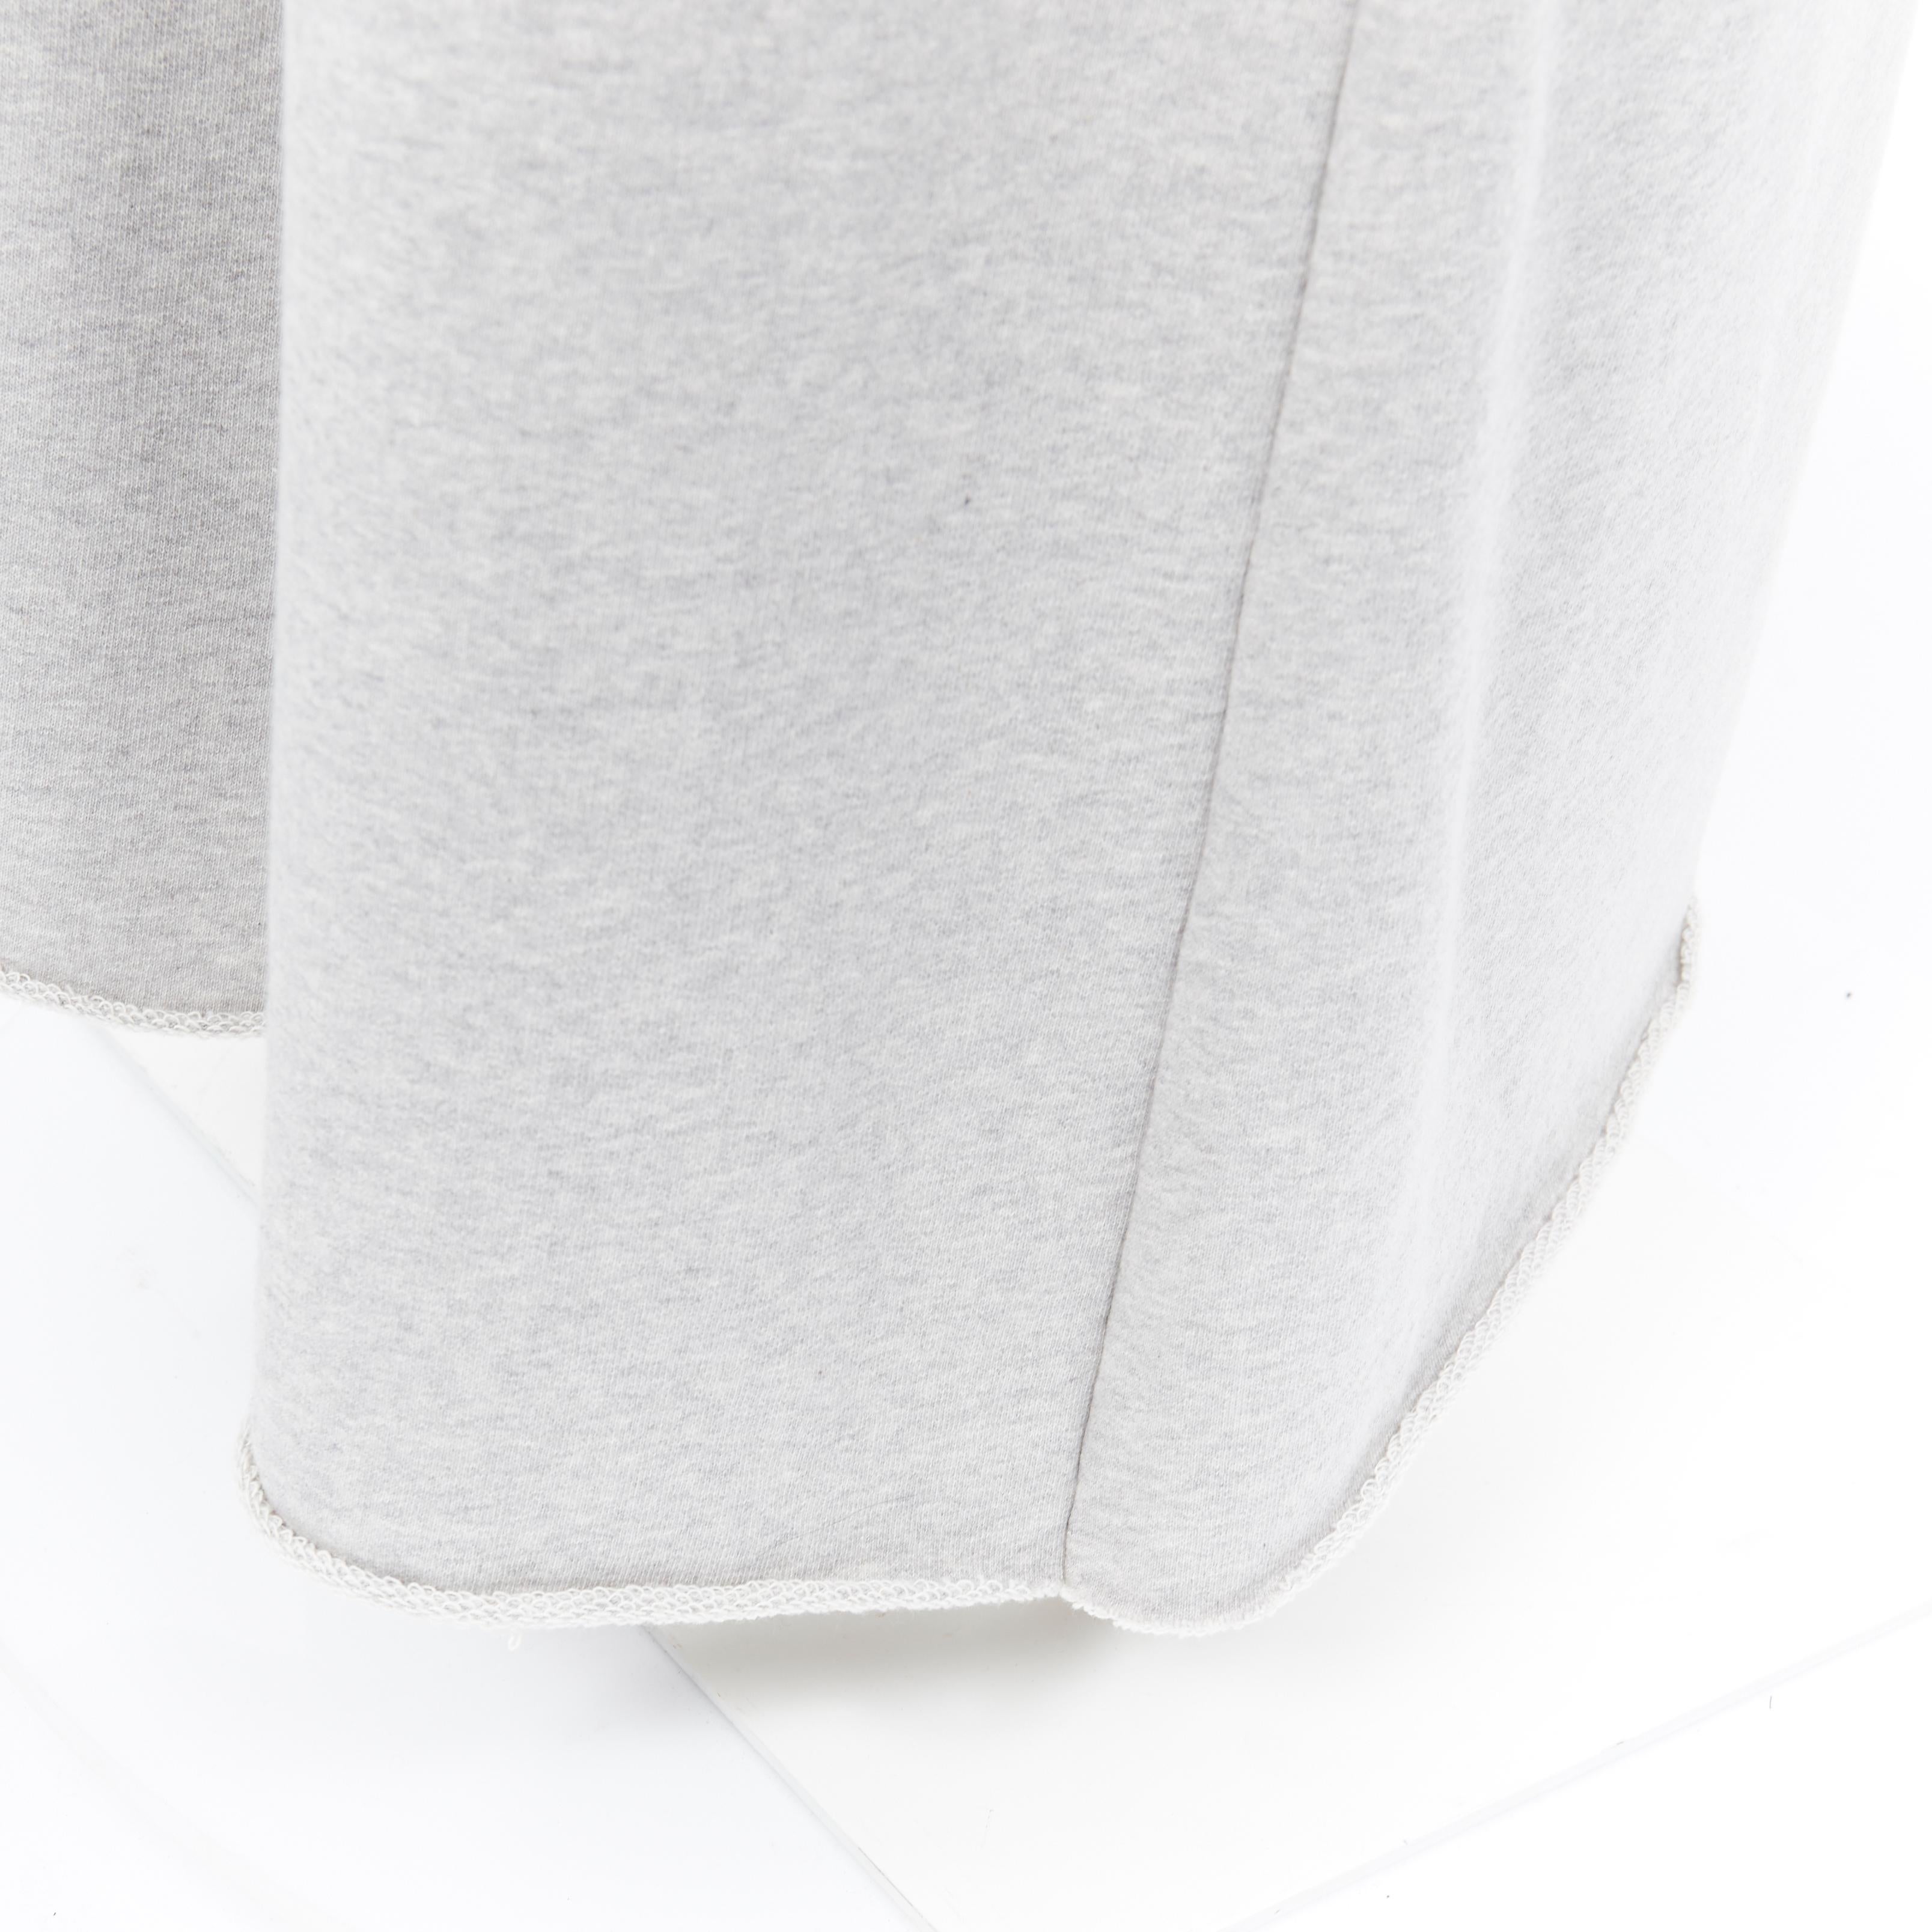 new VETEMENTS AW18 grey cotton oversized extreme wide leg sweatpants jumpsuit S 2